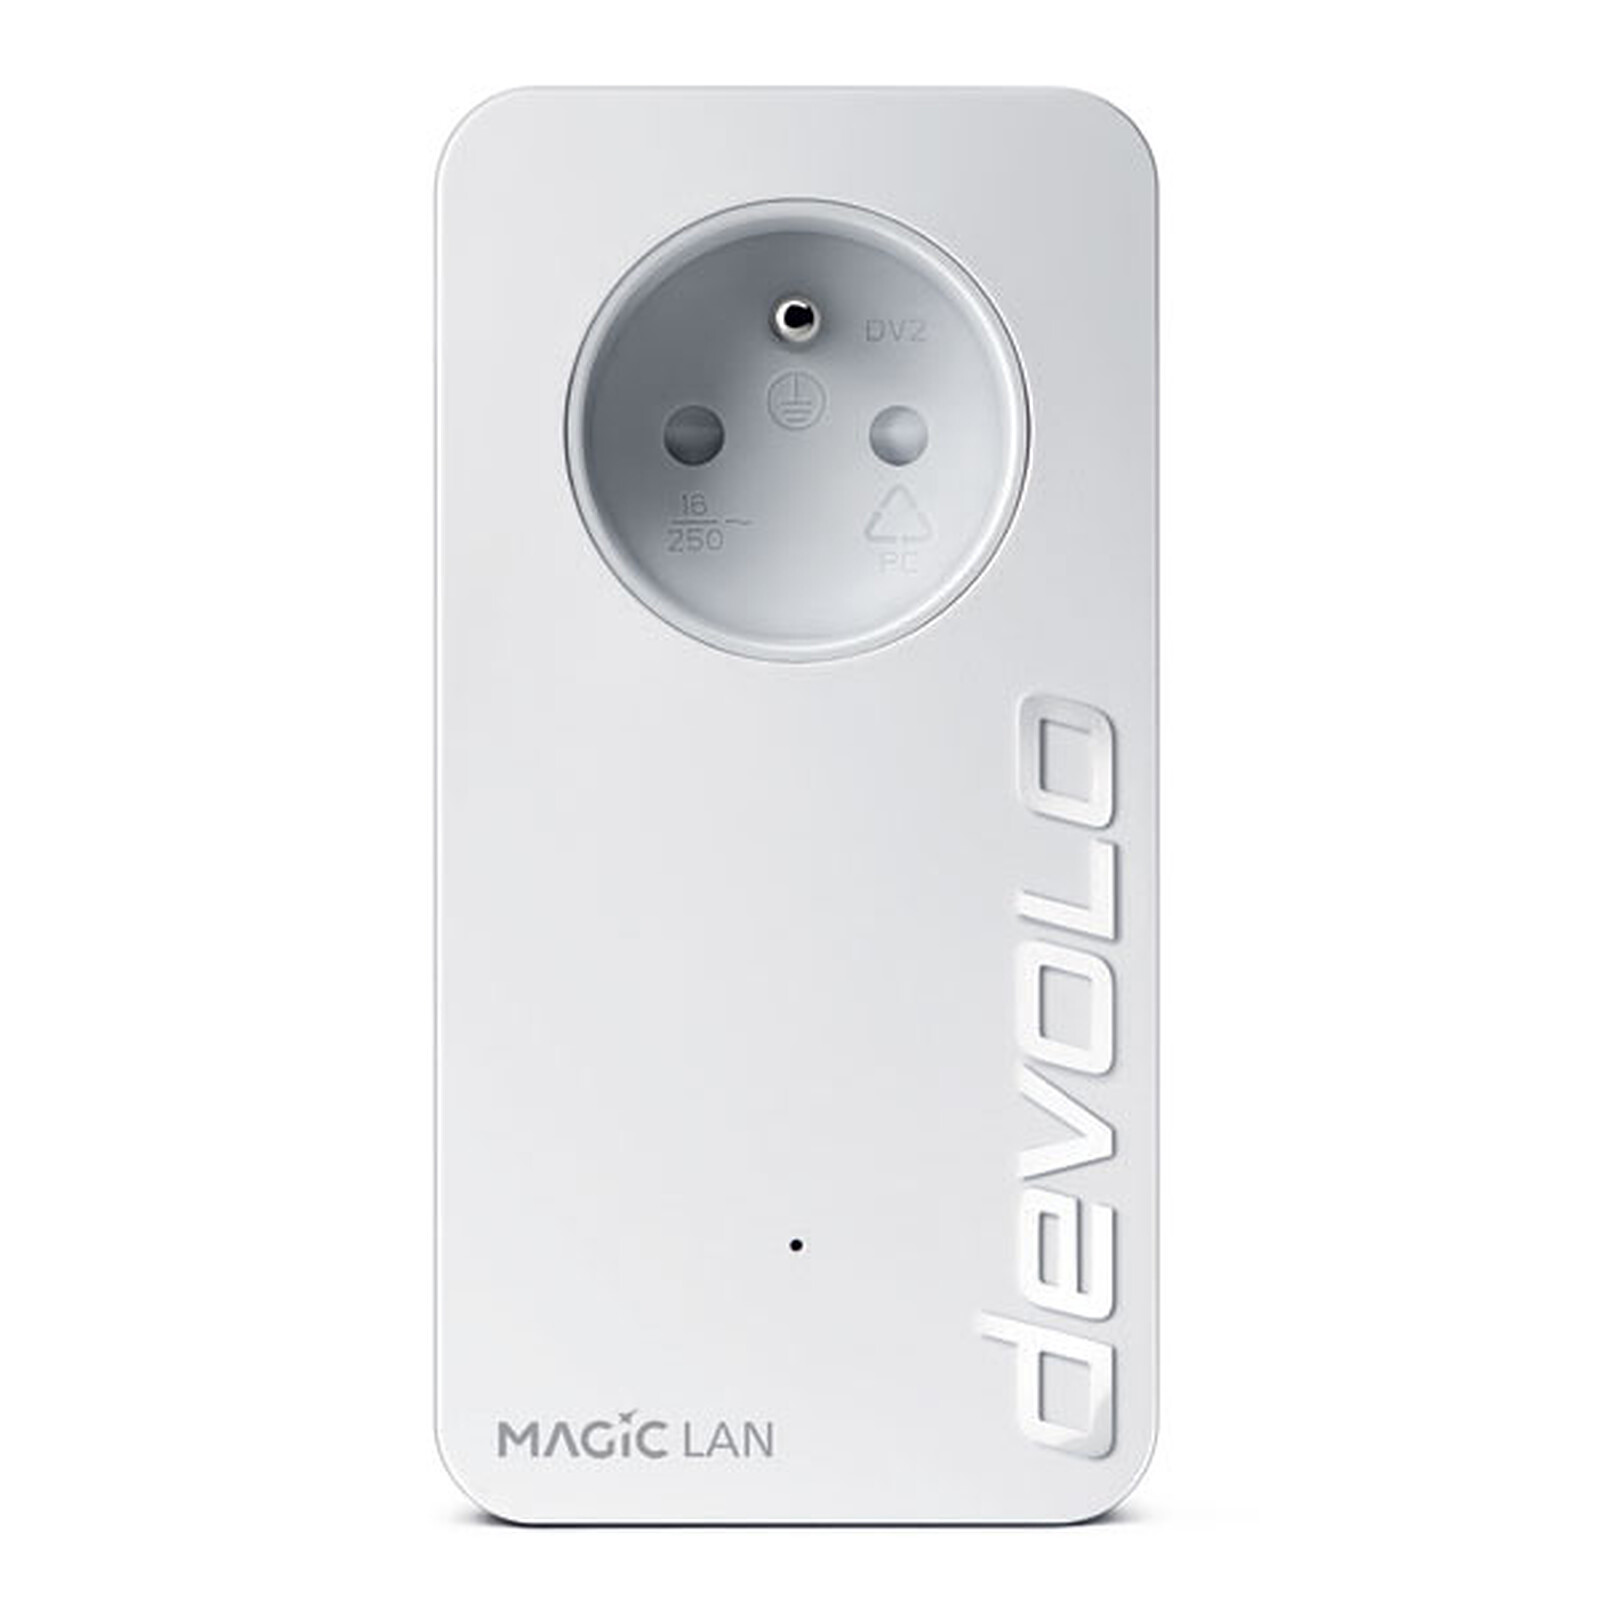 devolo Magic 2 WiFi next - Kit Multiroom - CPL - LDLC